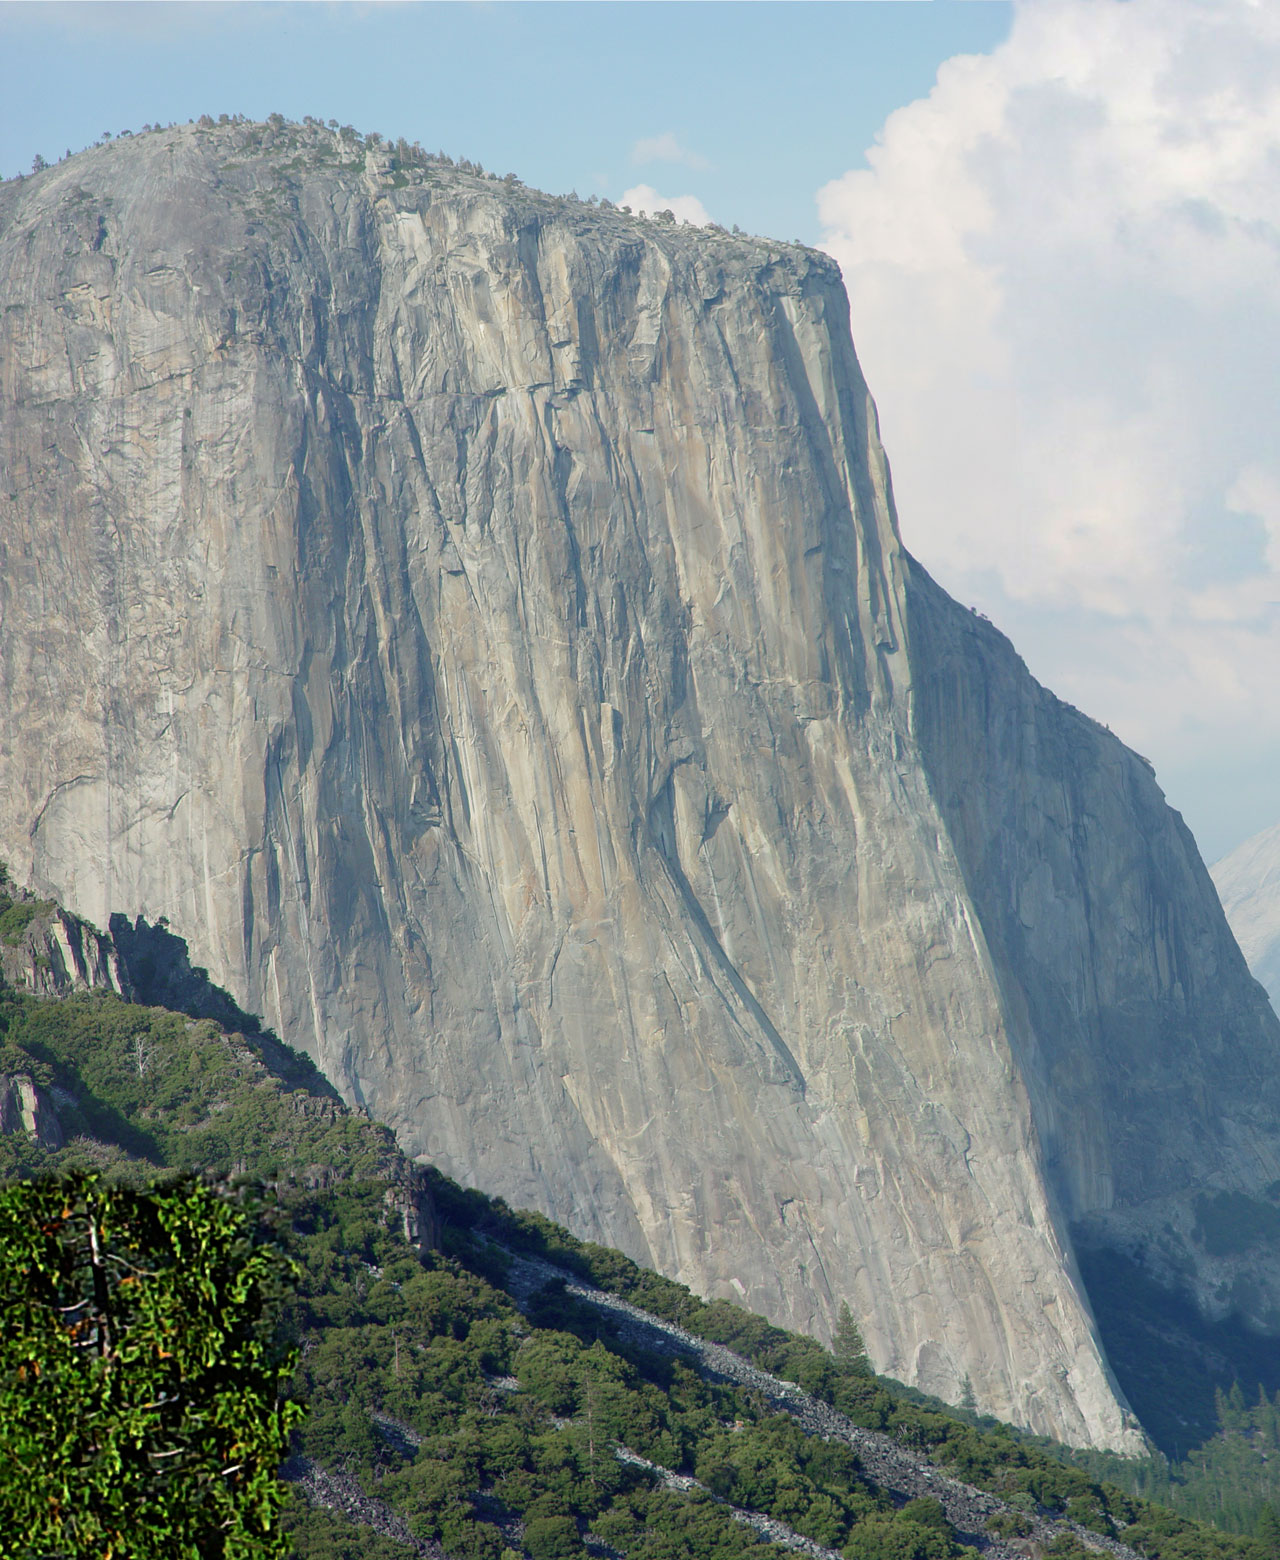 El Capitan in Yosemite, California from Valley View